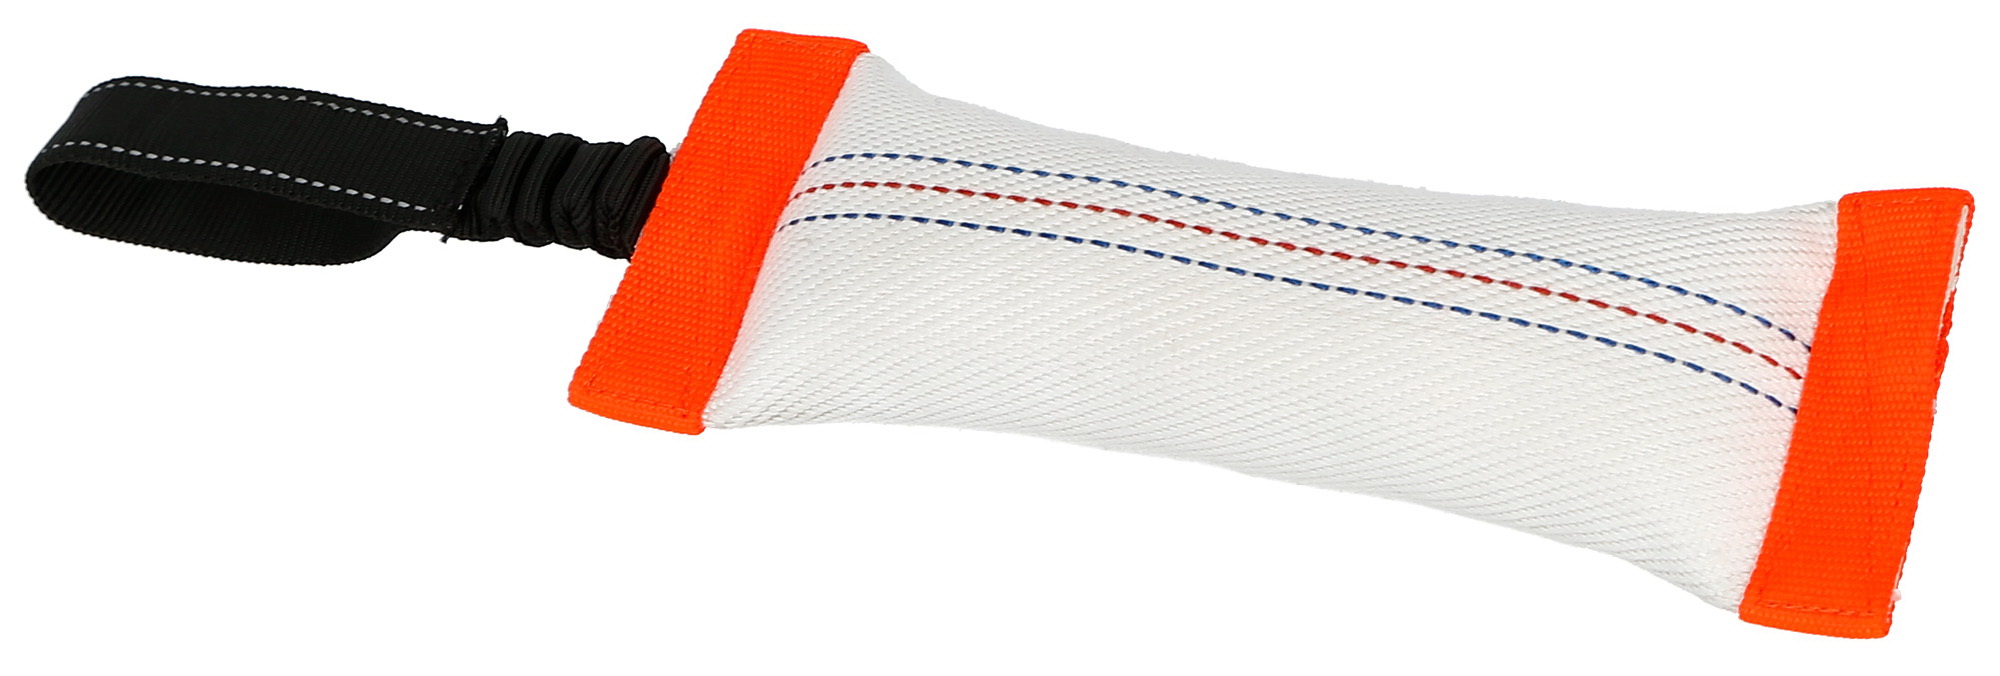 Trainingsdummy mit Schlaufe weiß/orange, 16x6cm